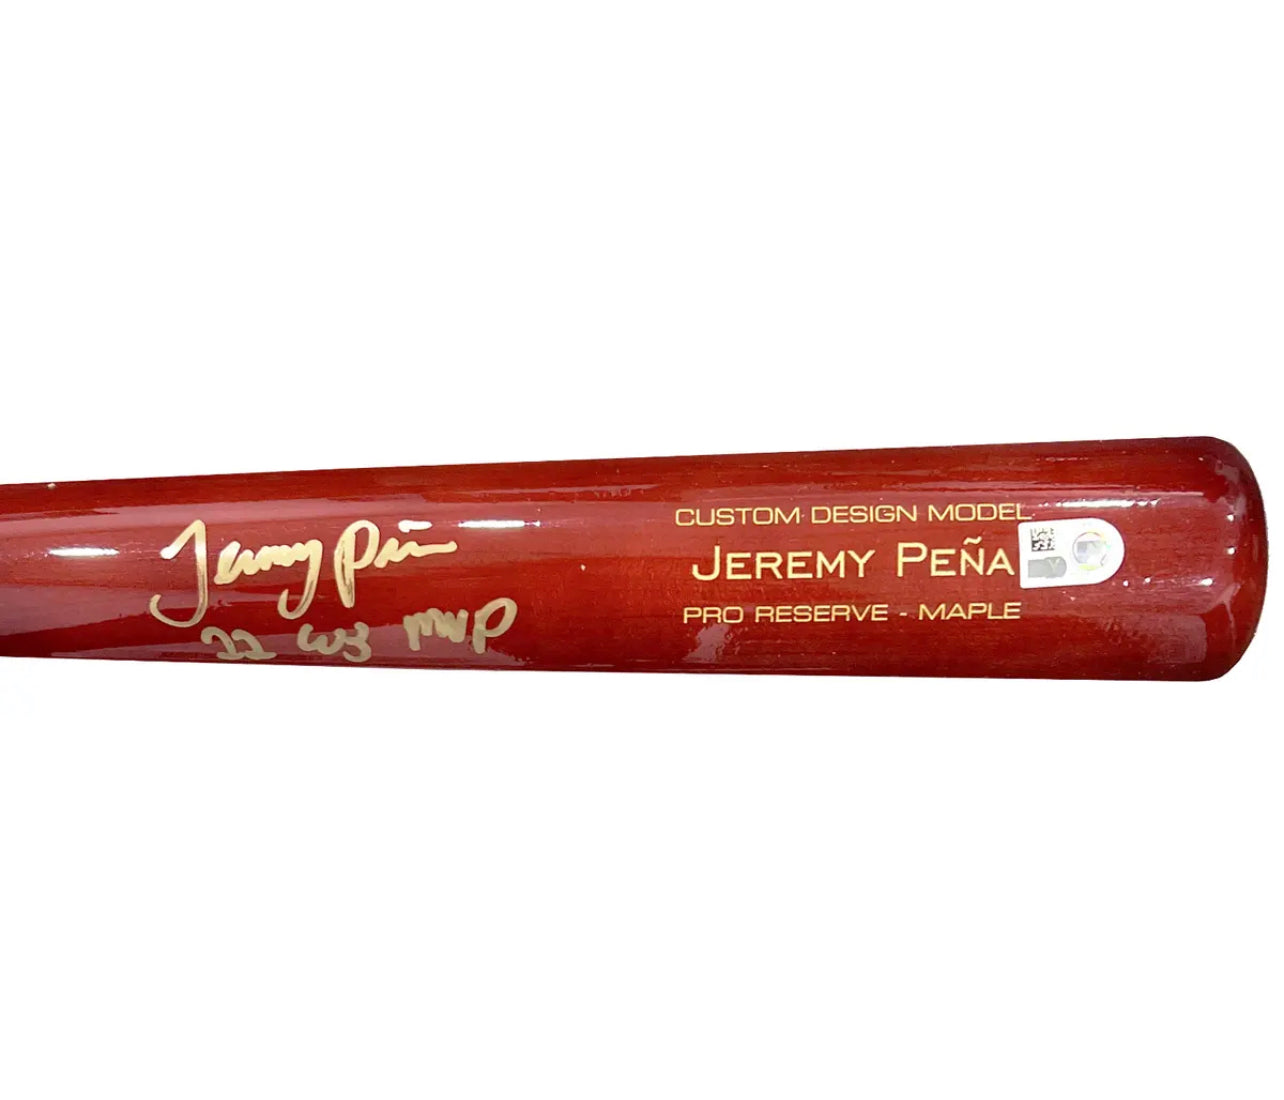 Jeremy Pena Autographed 2022 World Series MVP Signed Baseball MLB Auth